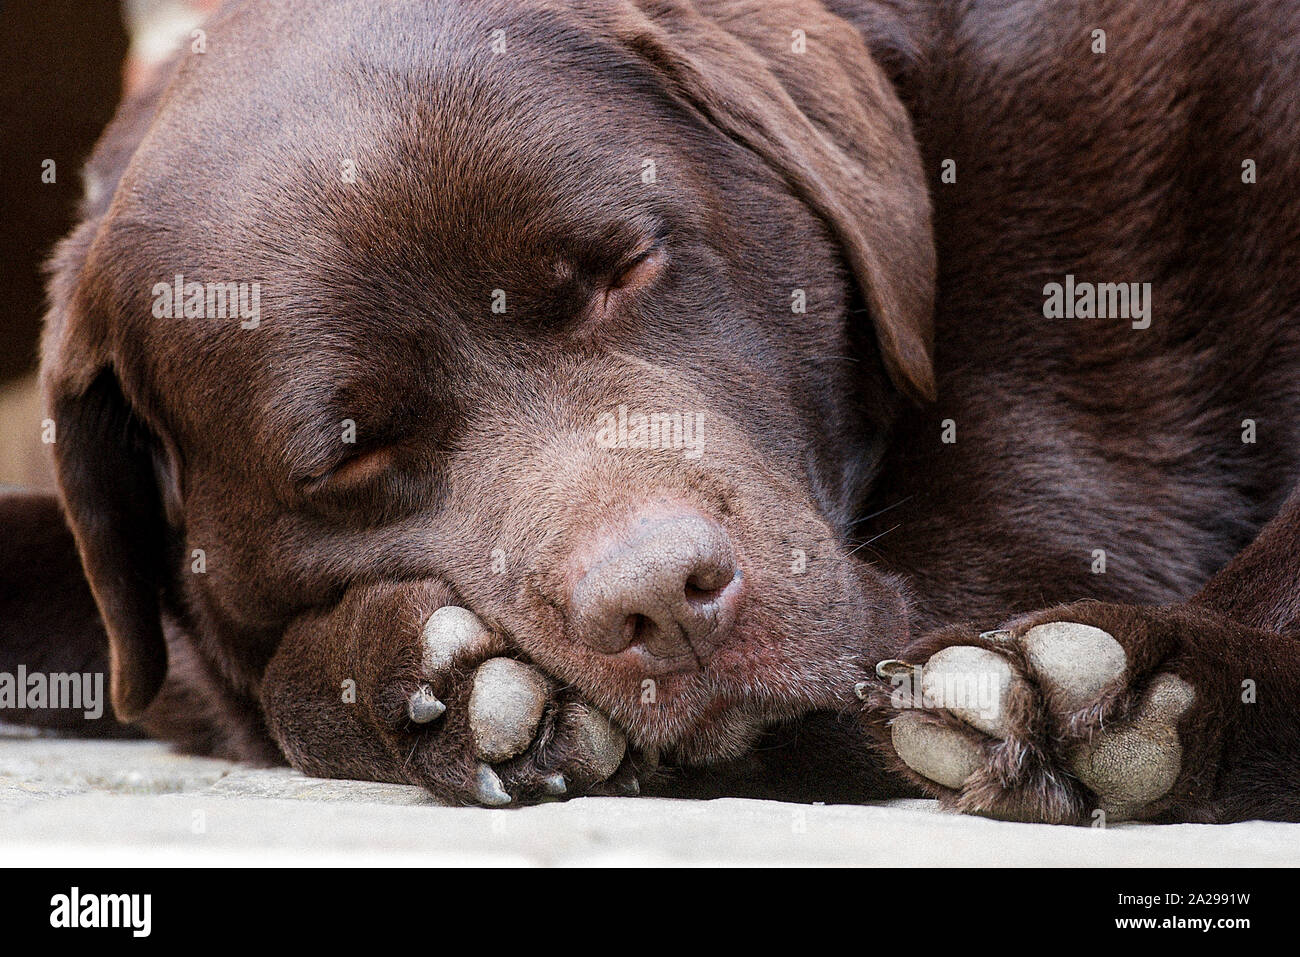 Sleeping chocolate Labrador Dog Stock Photo